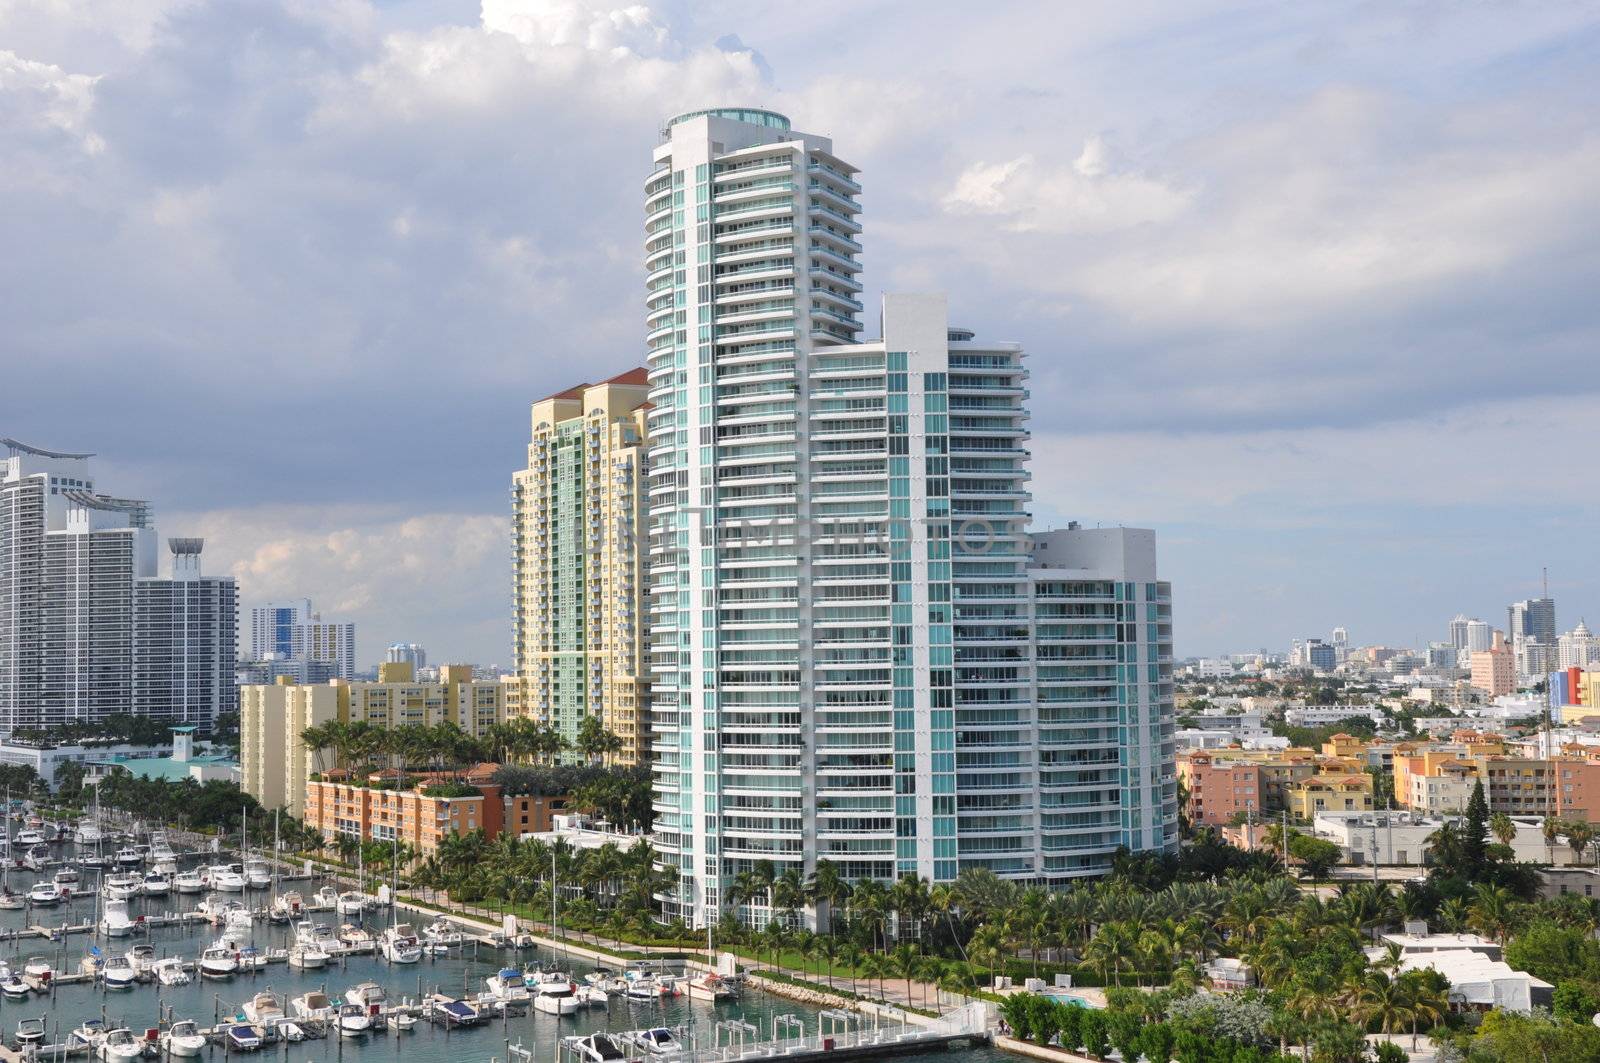 Miami in Florida by sainaniritu